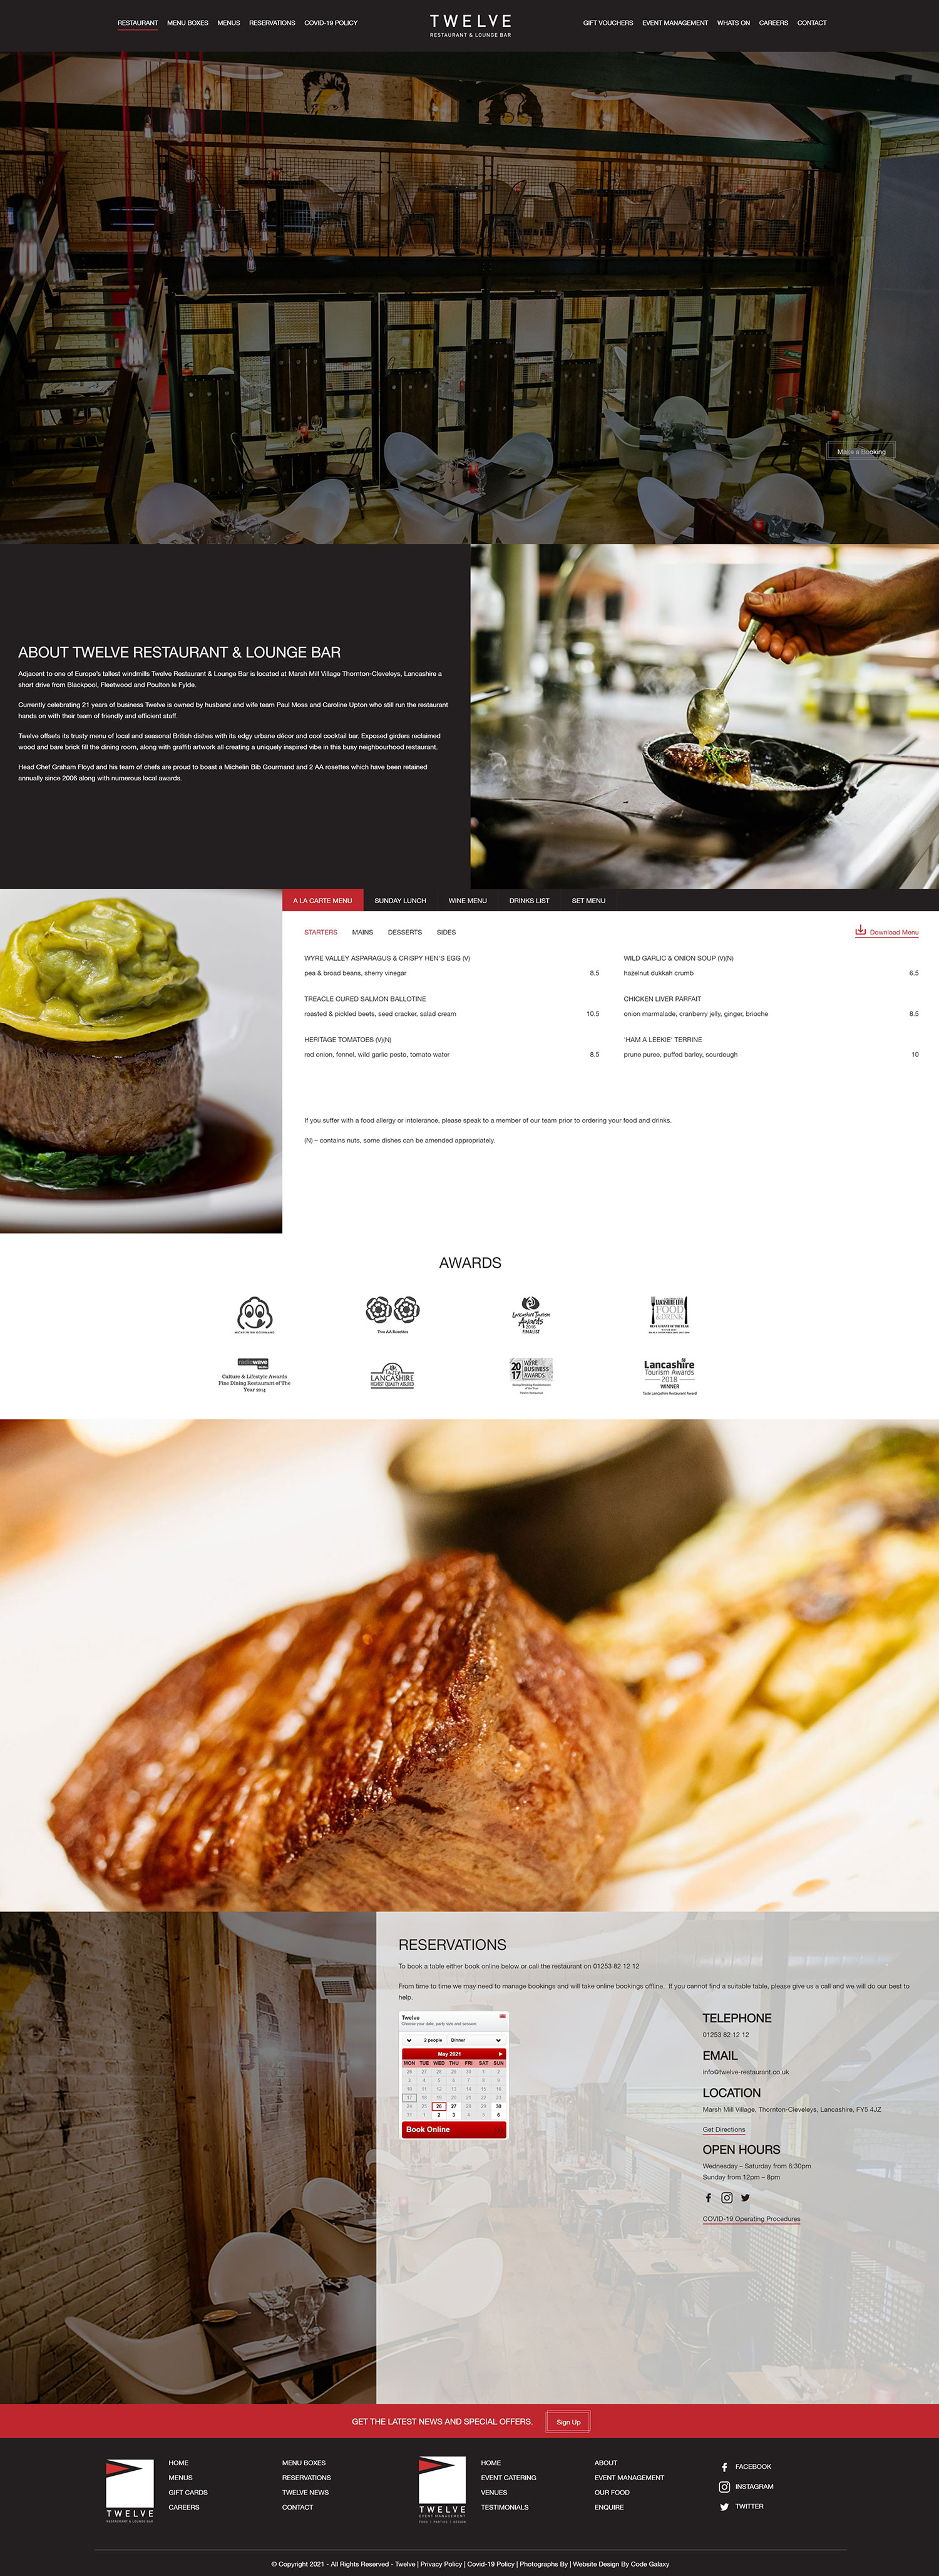 twleve restaurant bespoke website design